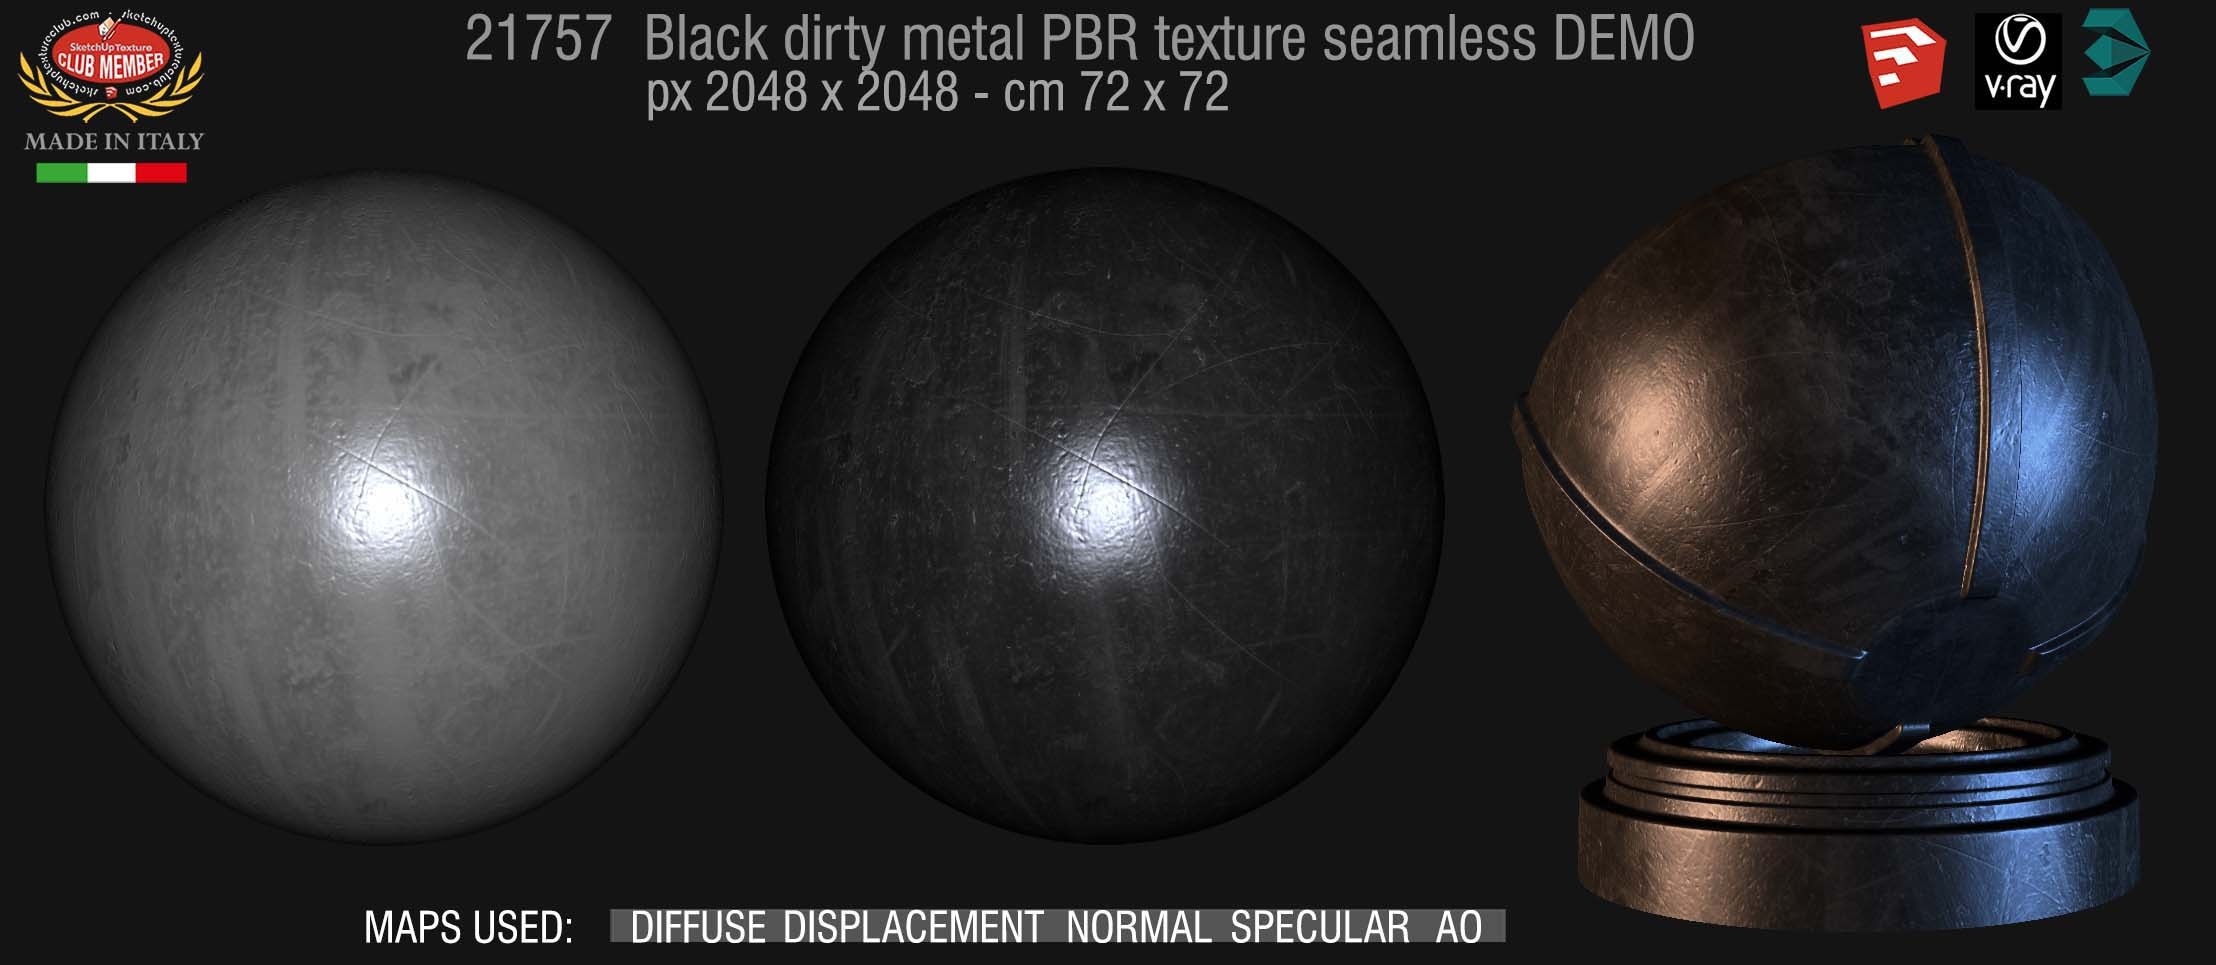 21757 black dirty metal PBR texture seamless DEMO